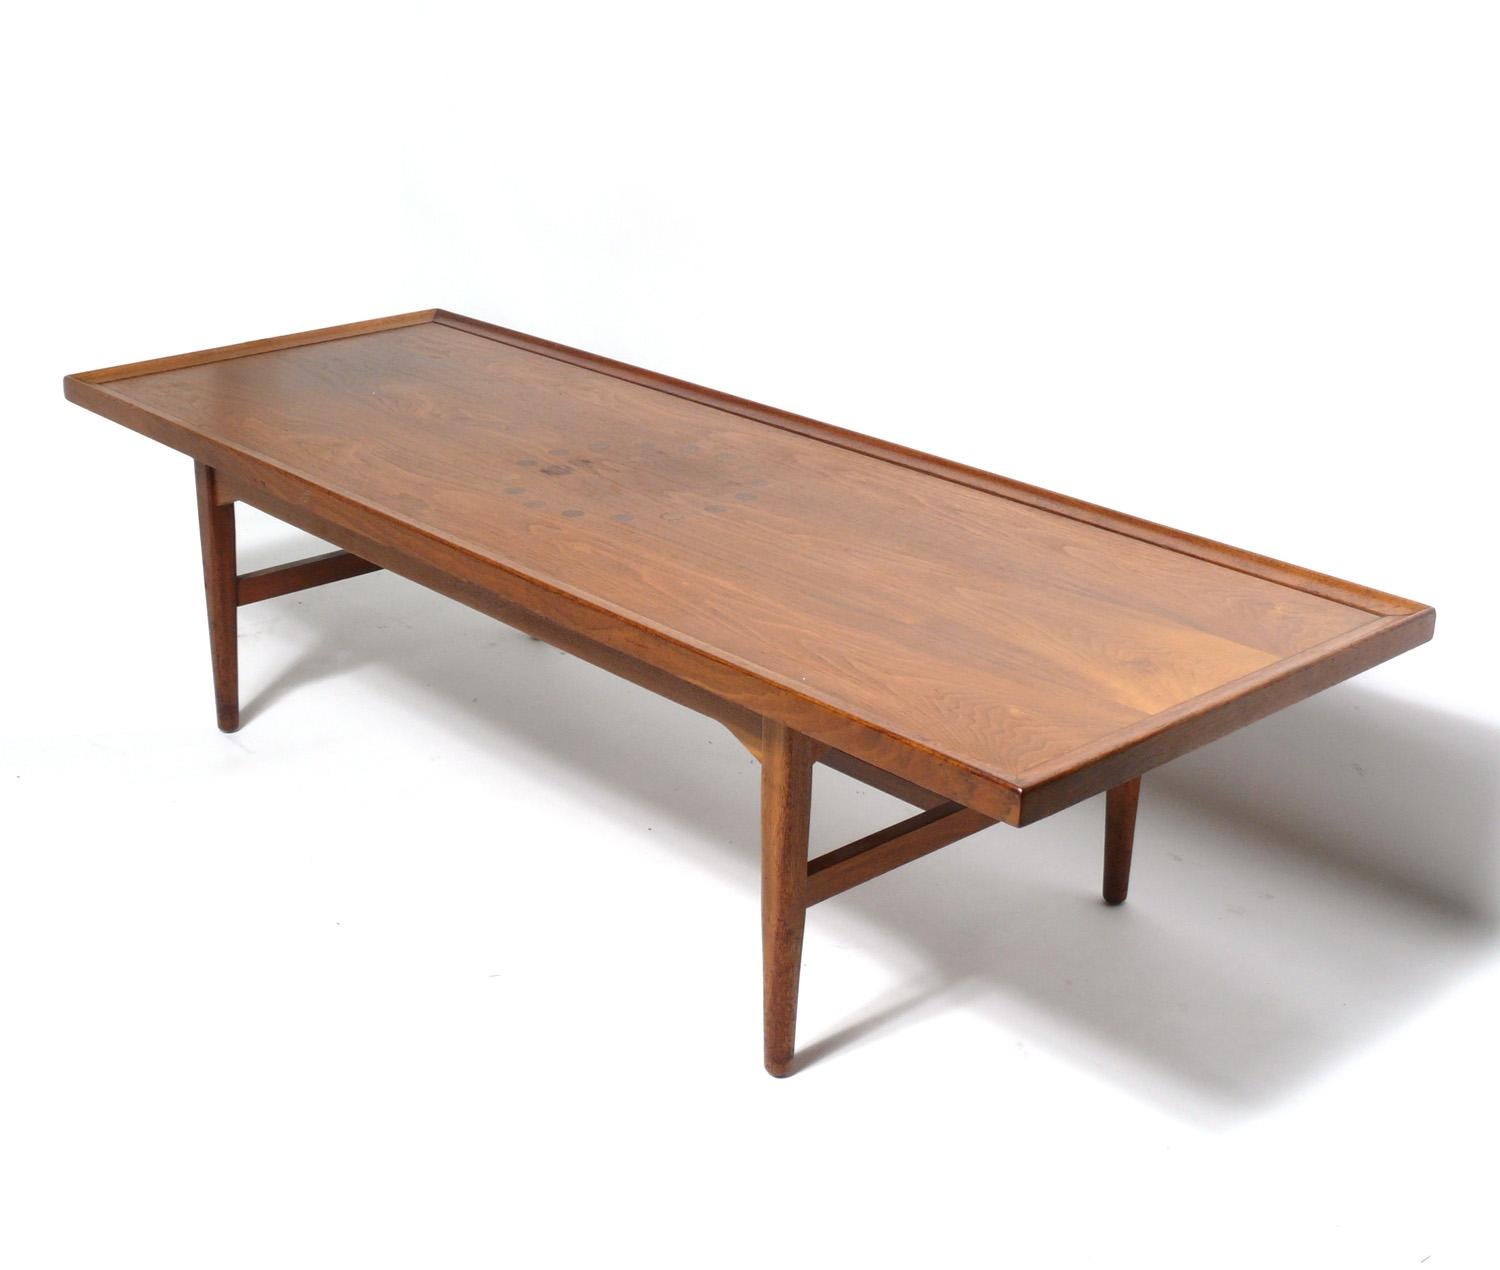 Mid-Century Modern coffee table, designed by Kipp Stewart for Drexel Declaration, American, circa 1950s.